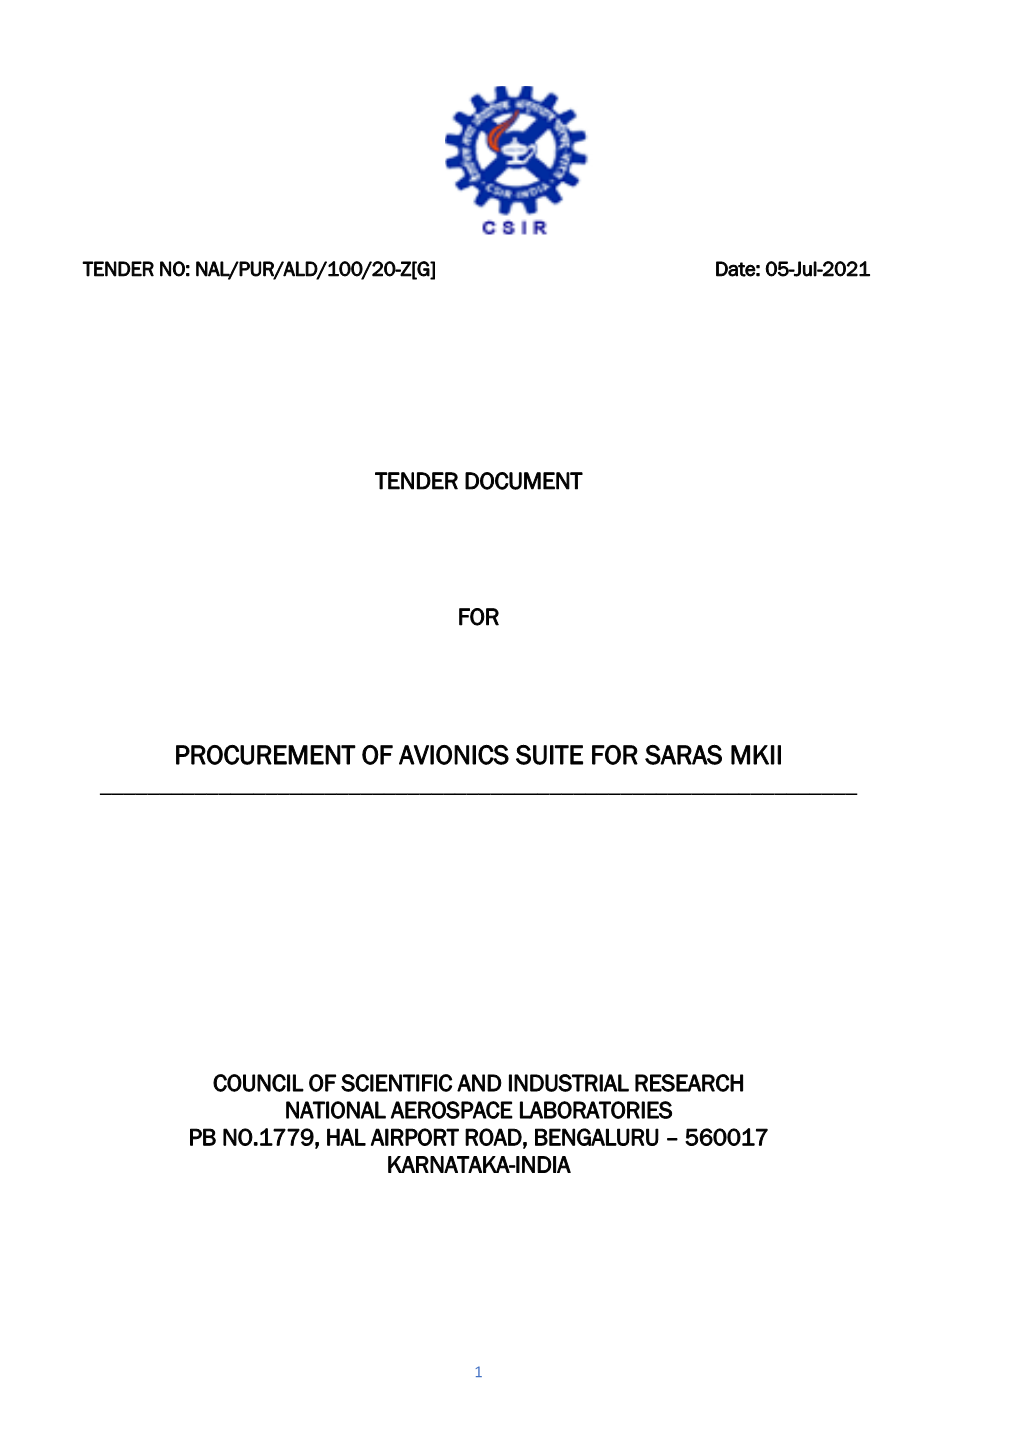 Procurement of Avionics Suite for Saras Mkii ______